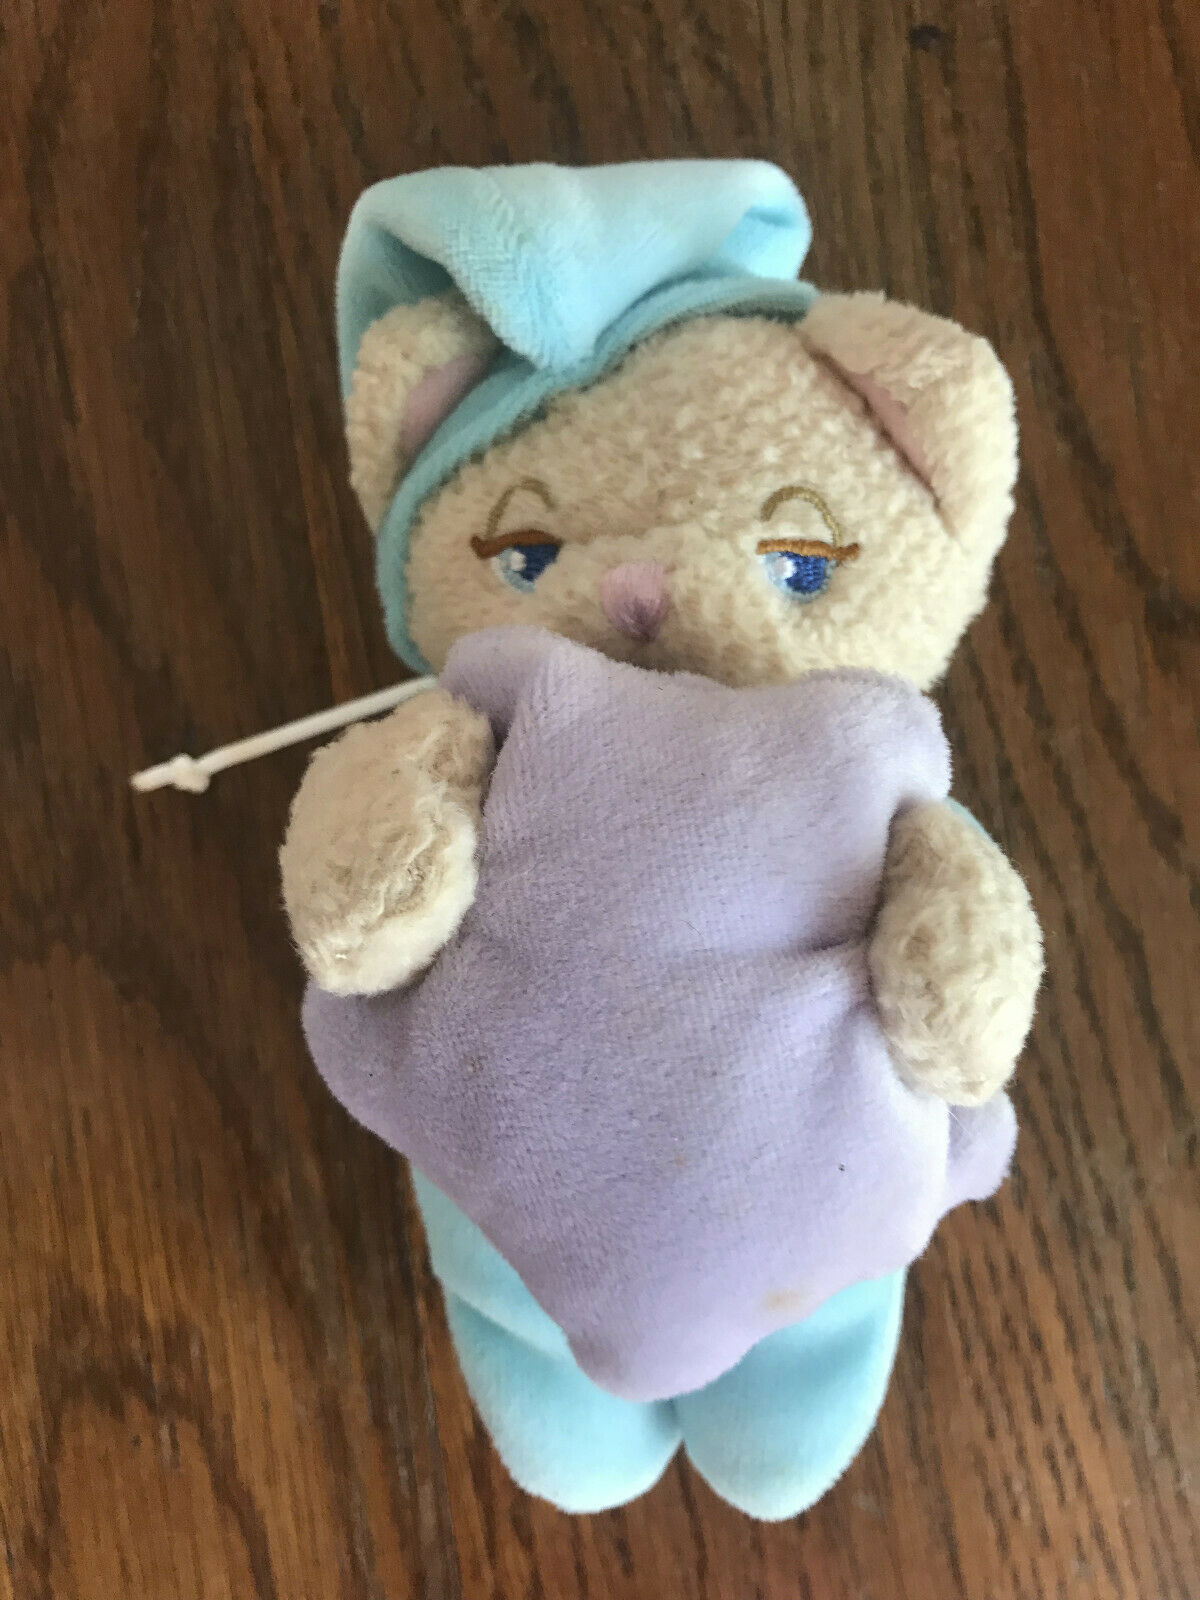 Fisher Price Mattel Sleepy Plush Bear with Star Baby Crib Mobile Replacement  - $9.49